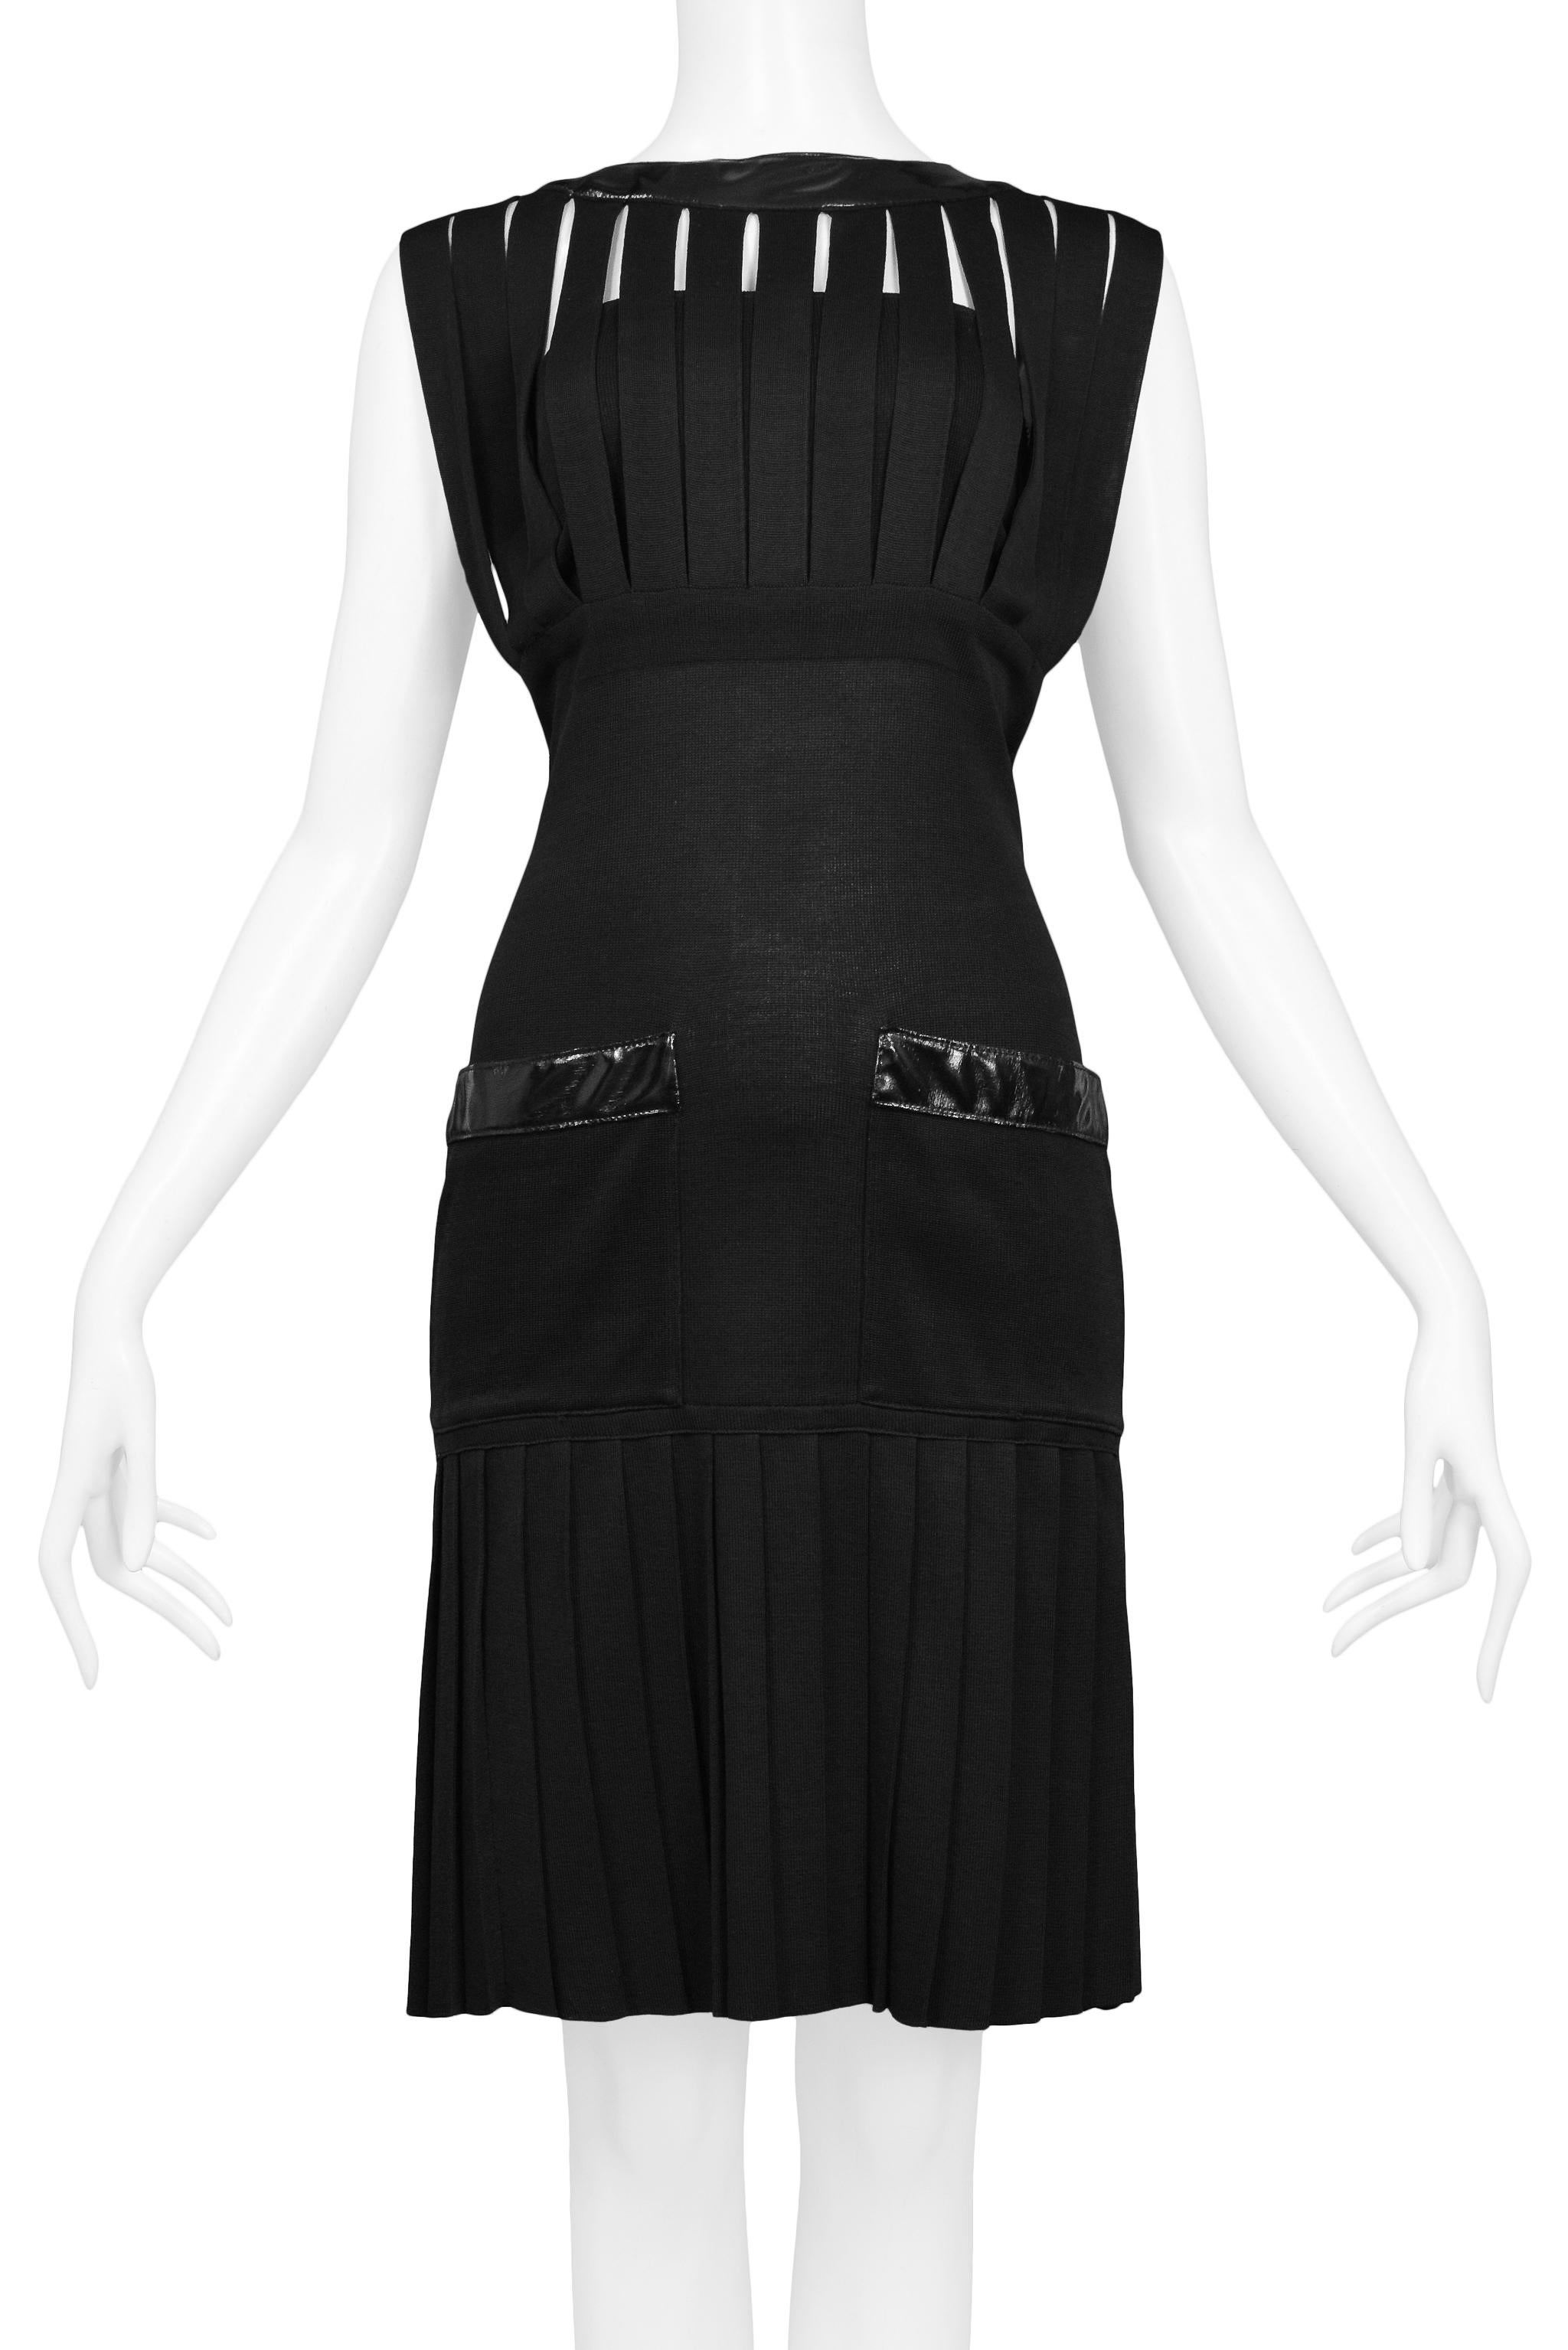 Women's Chanel Black Knit & Wet Look Cage Dress For Sale